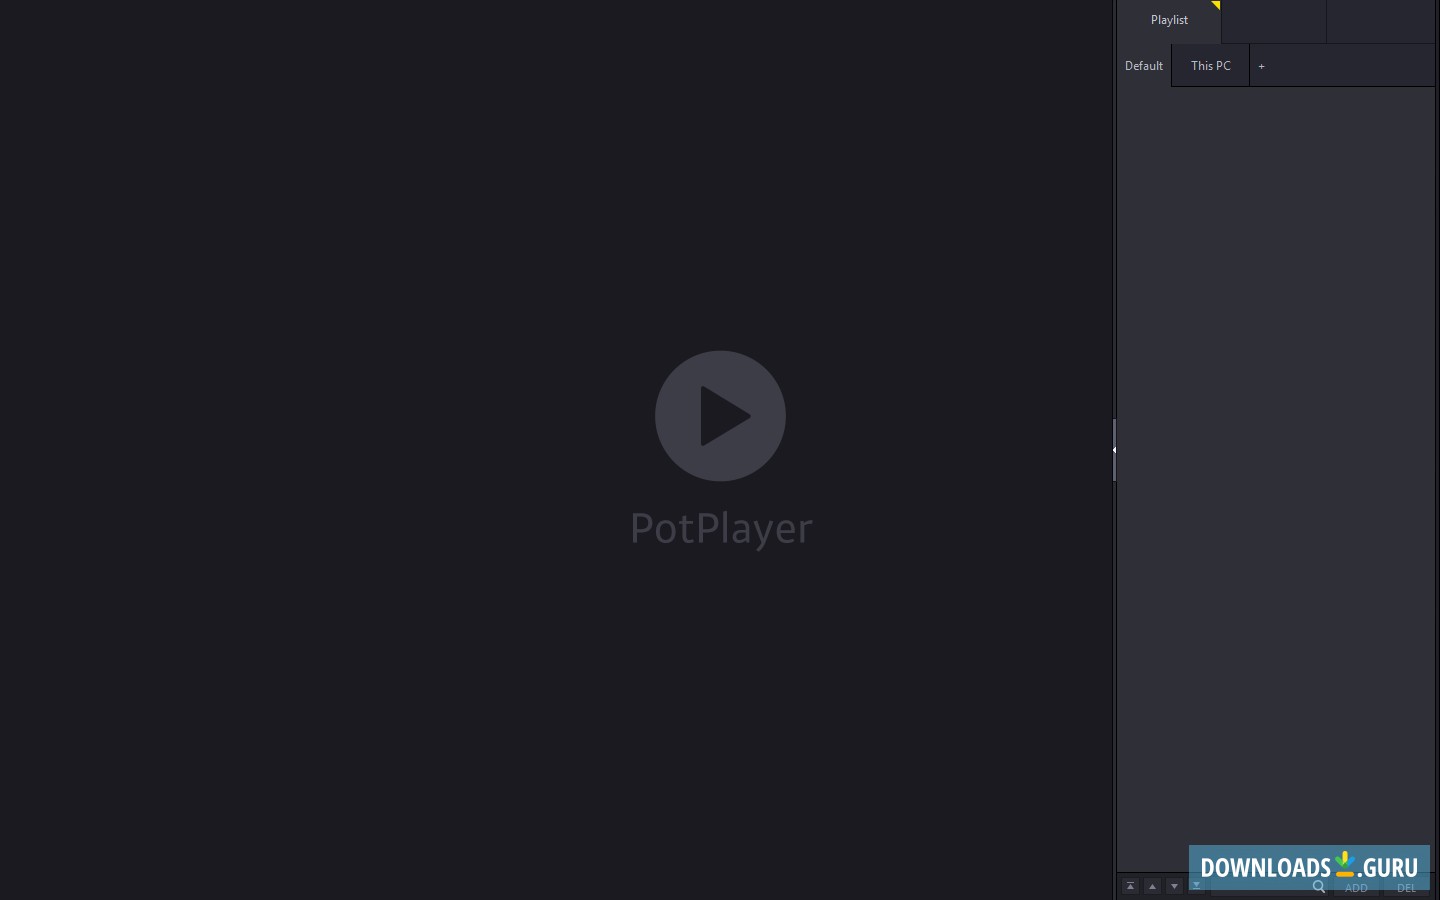 download latest potplayer for windows 10